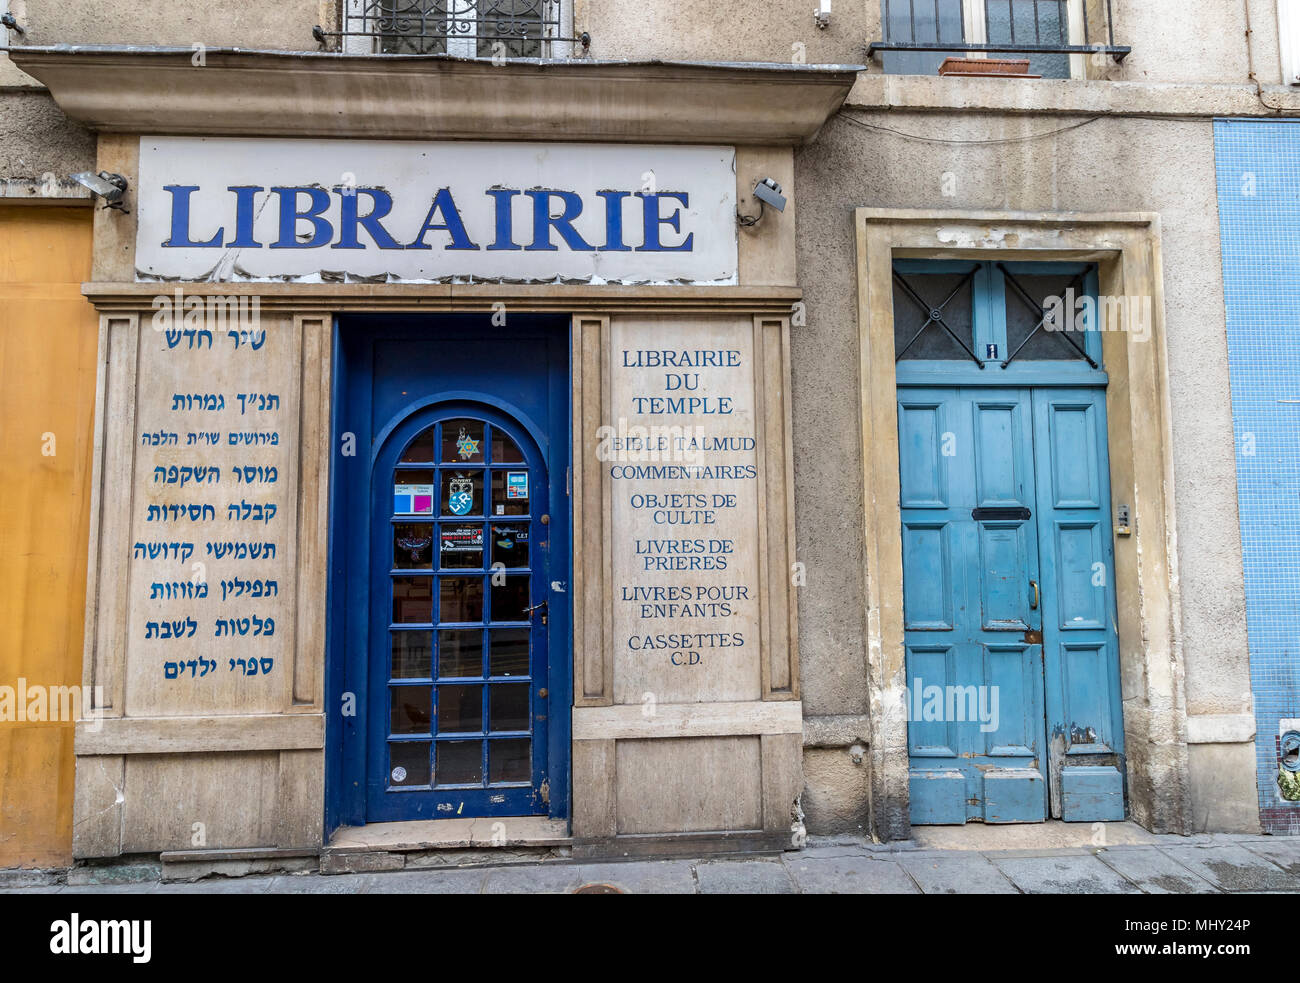 Librairie du Temple una libreria ebraica, Rue des Hospitalières Saint-Gervais , paris , France Foto Stock